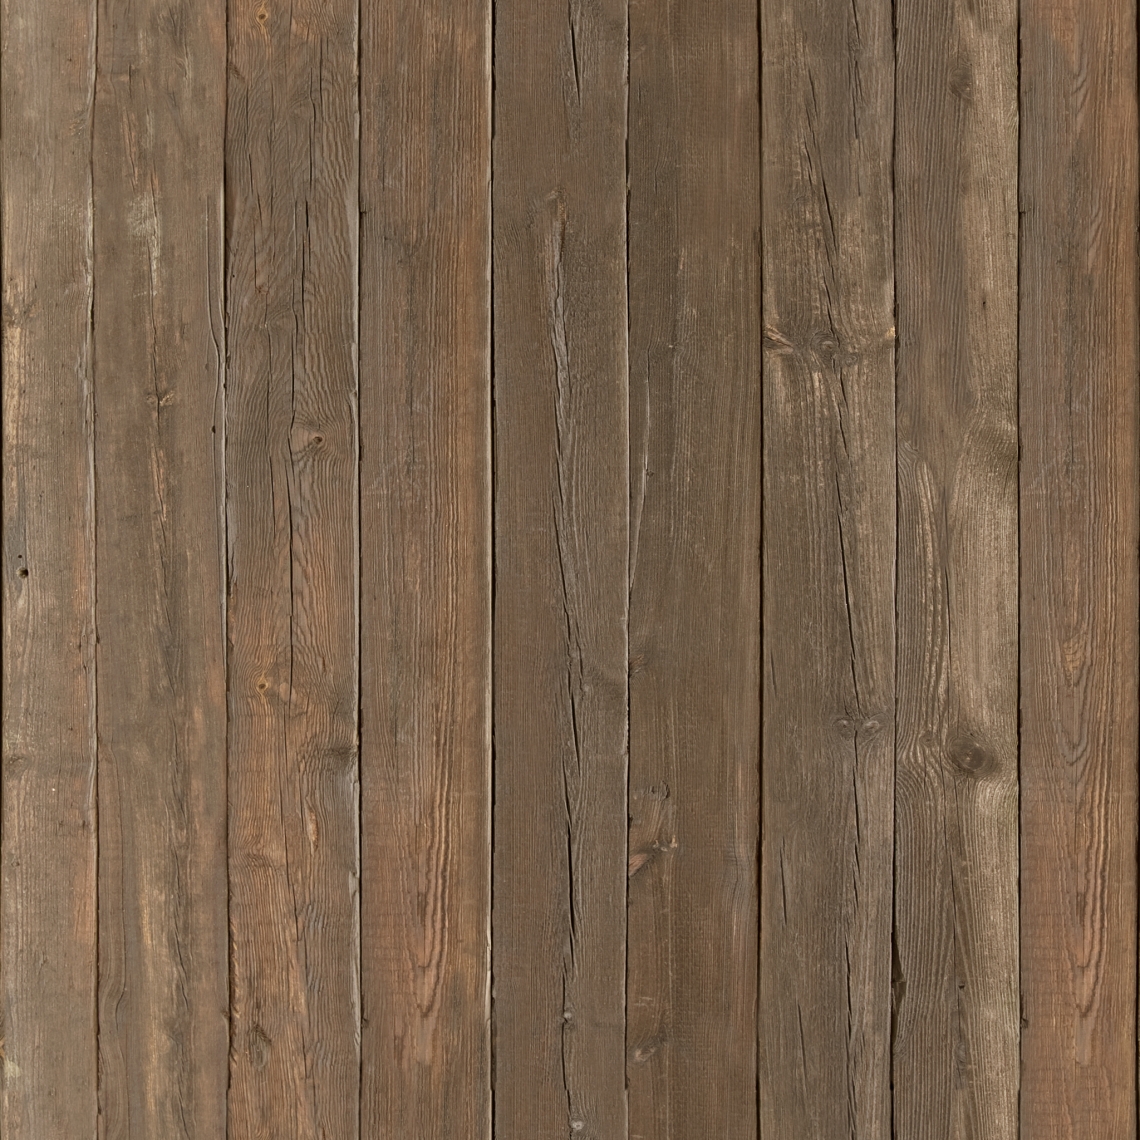 Wood Plank Seamless Texture Image To U 